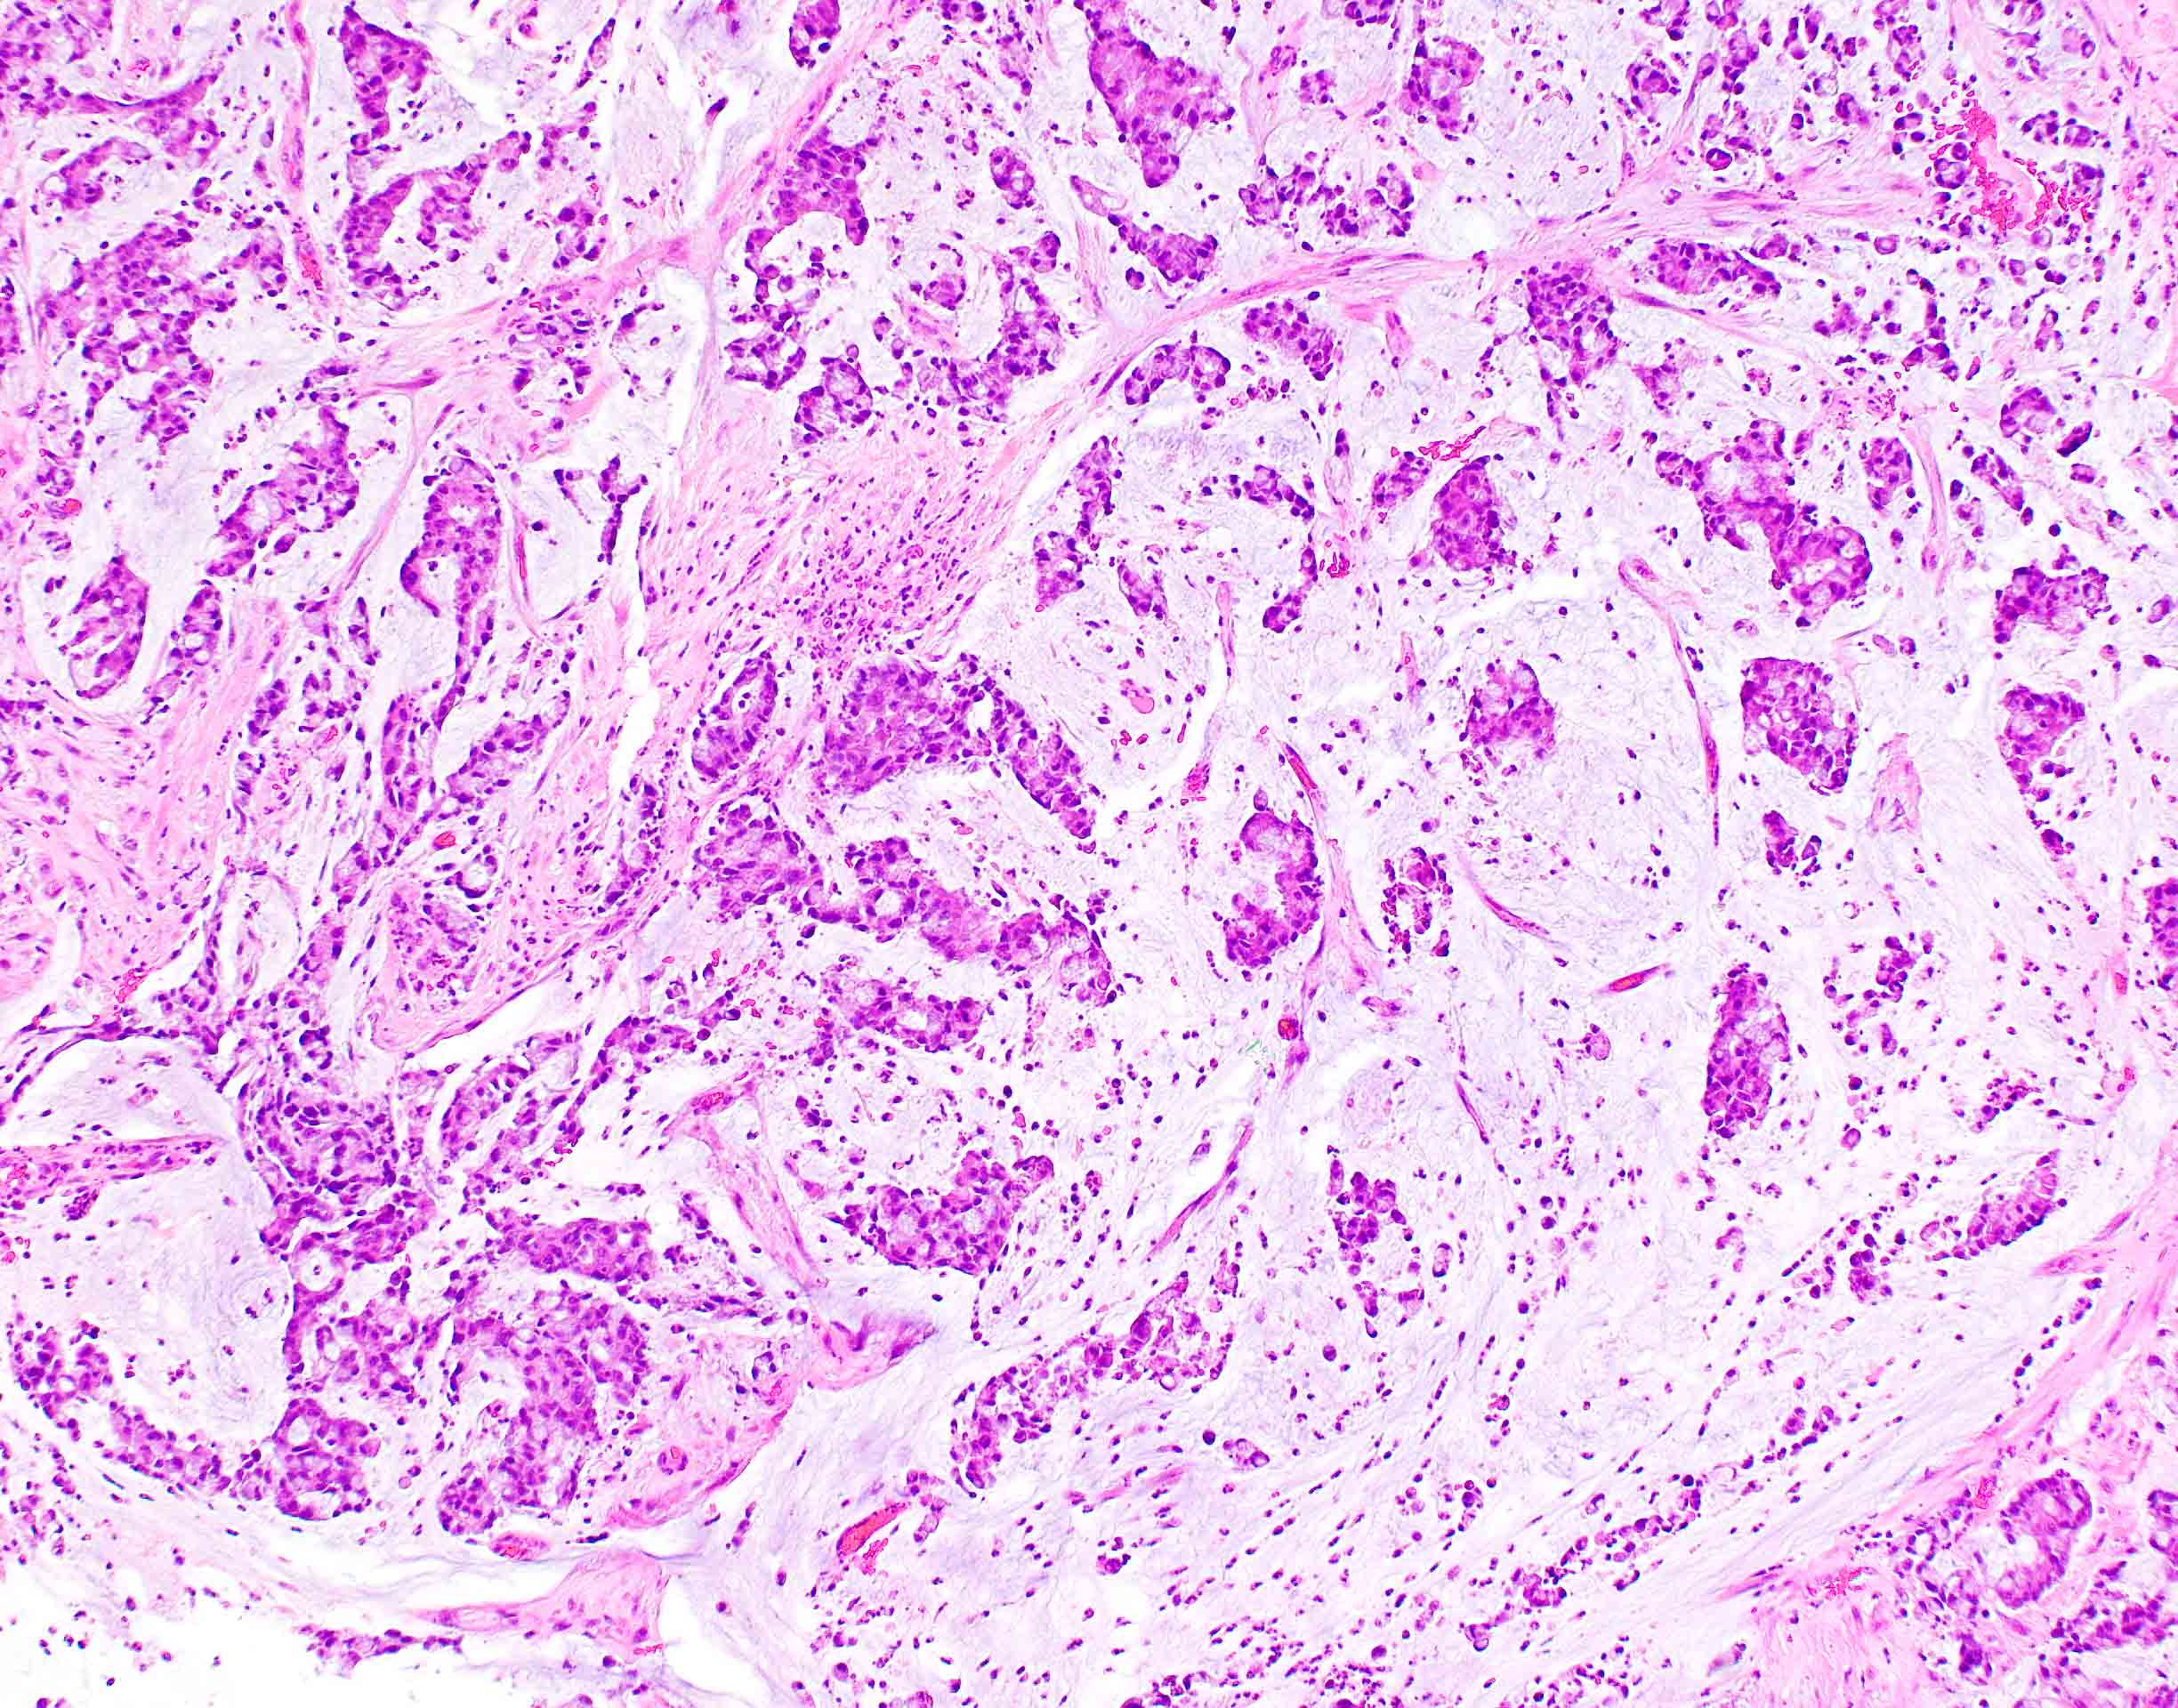 Mucinous adenocarcinoma of colon, moderately differentiated